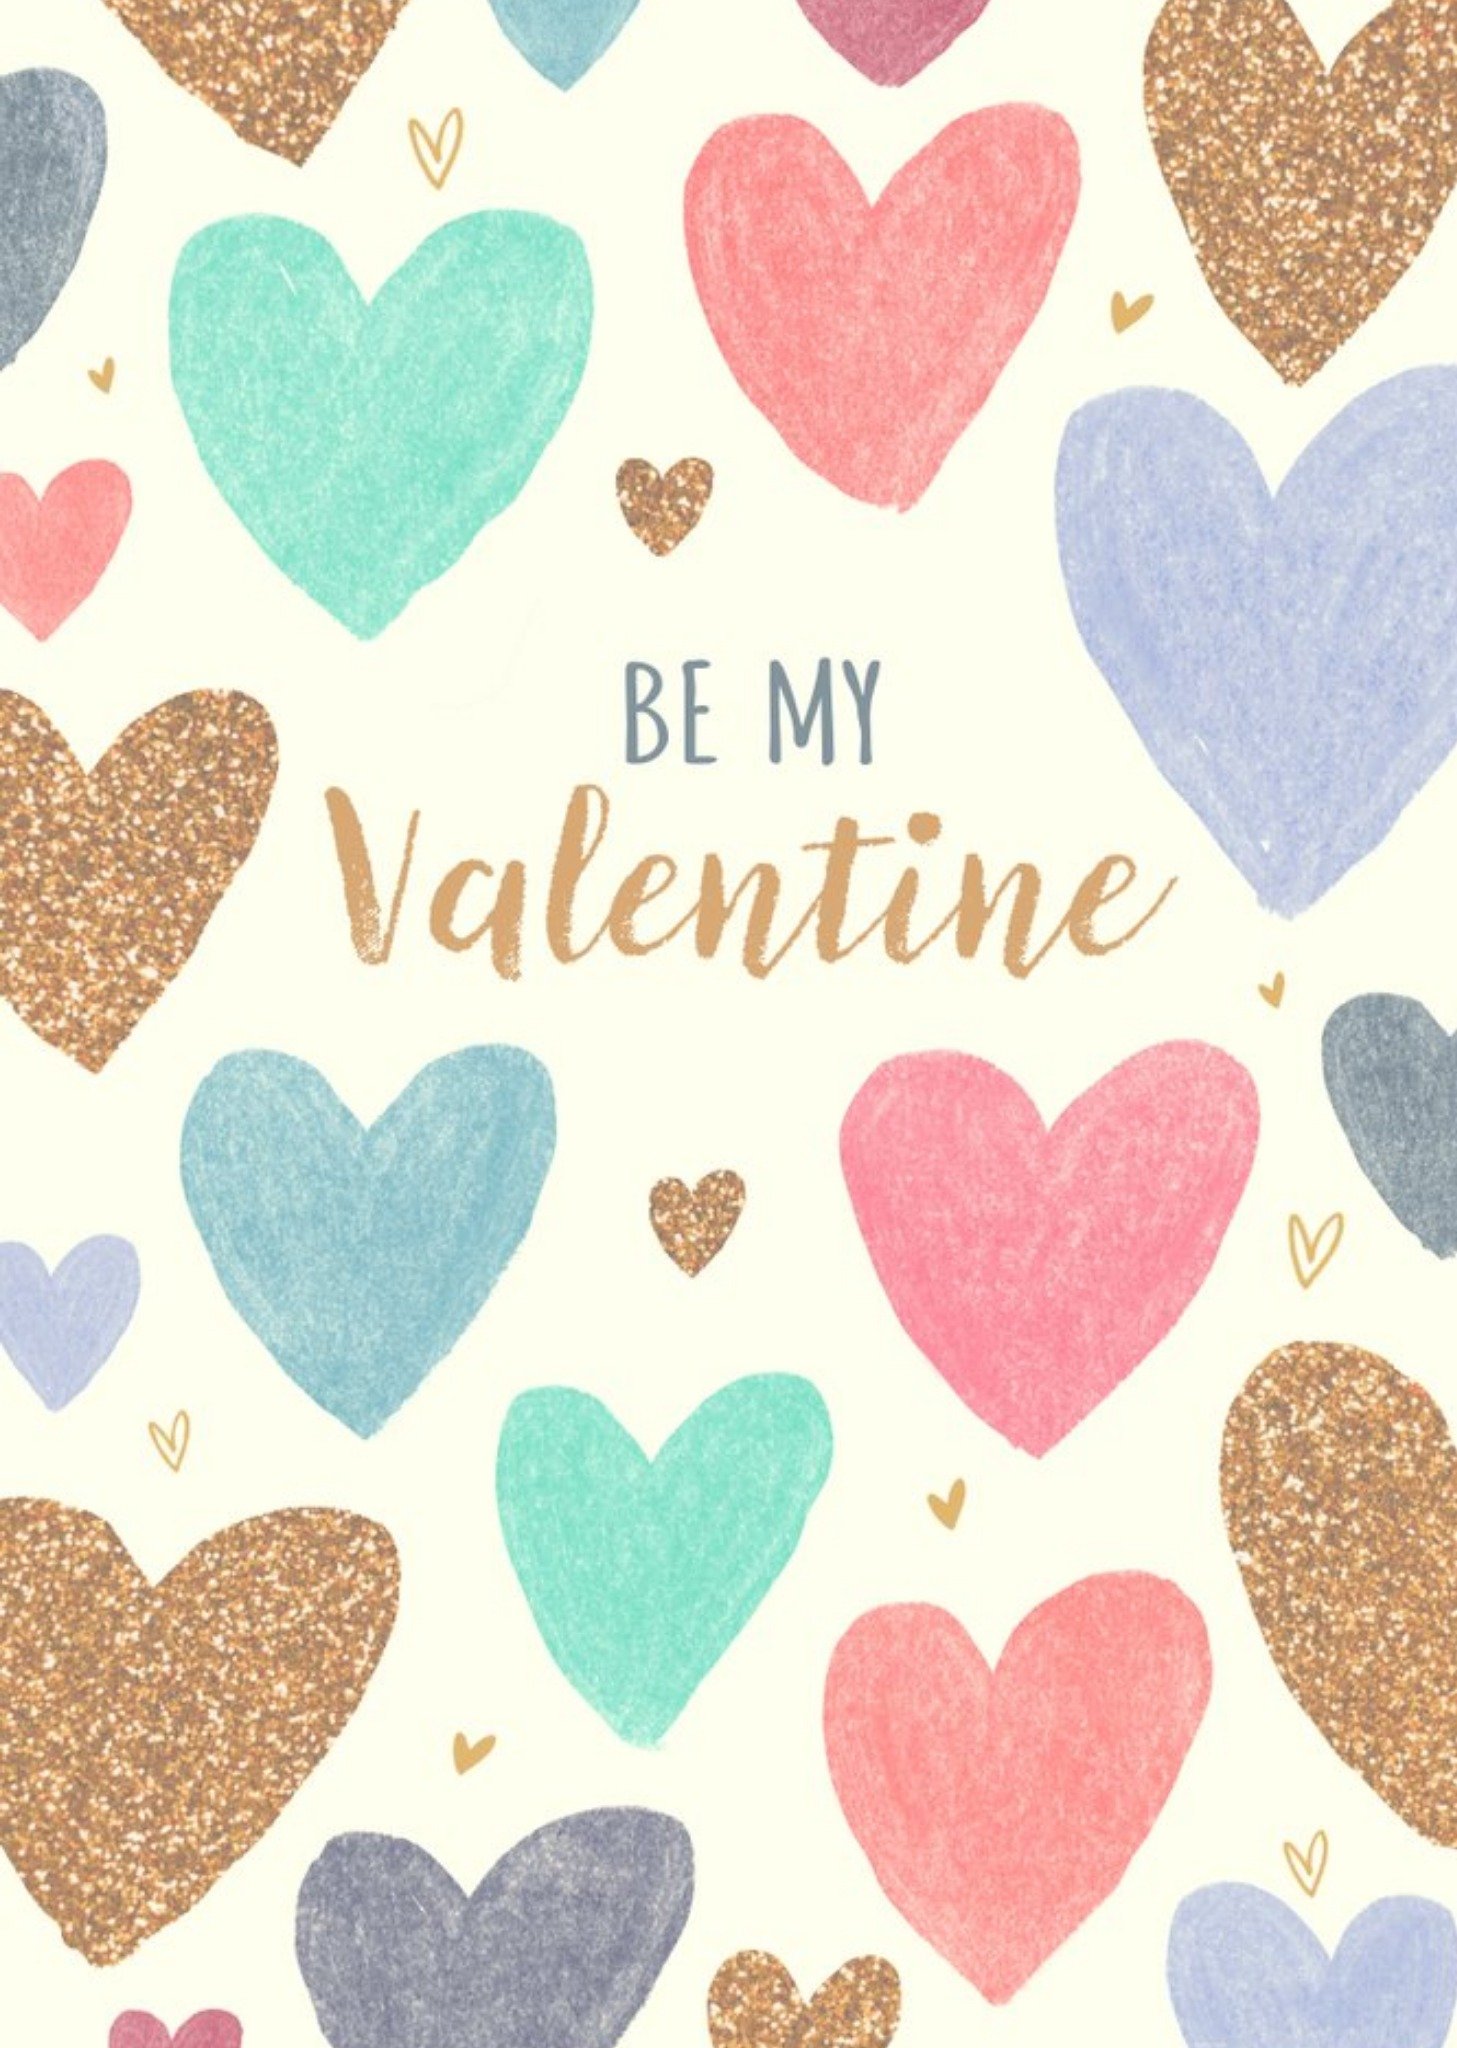 Moonpig Dalia Clark Design Illustrated Heart Pattern Valentine's Day Card, Large